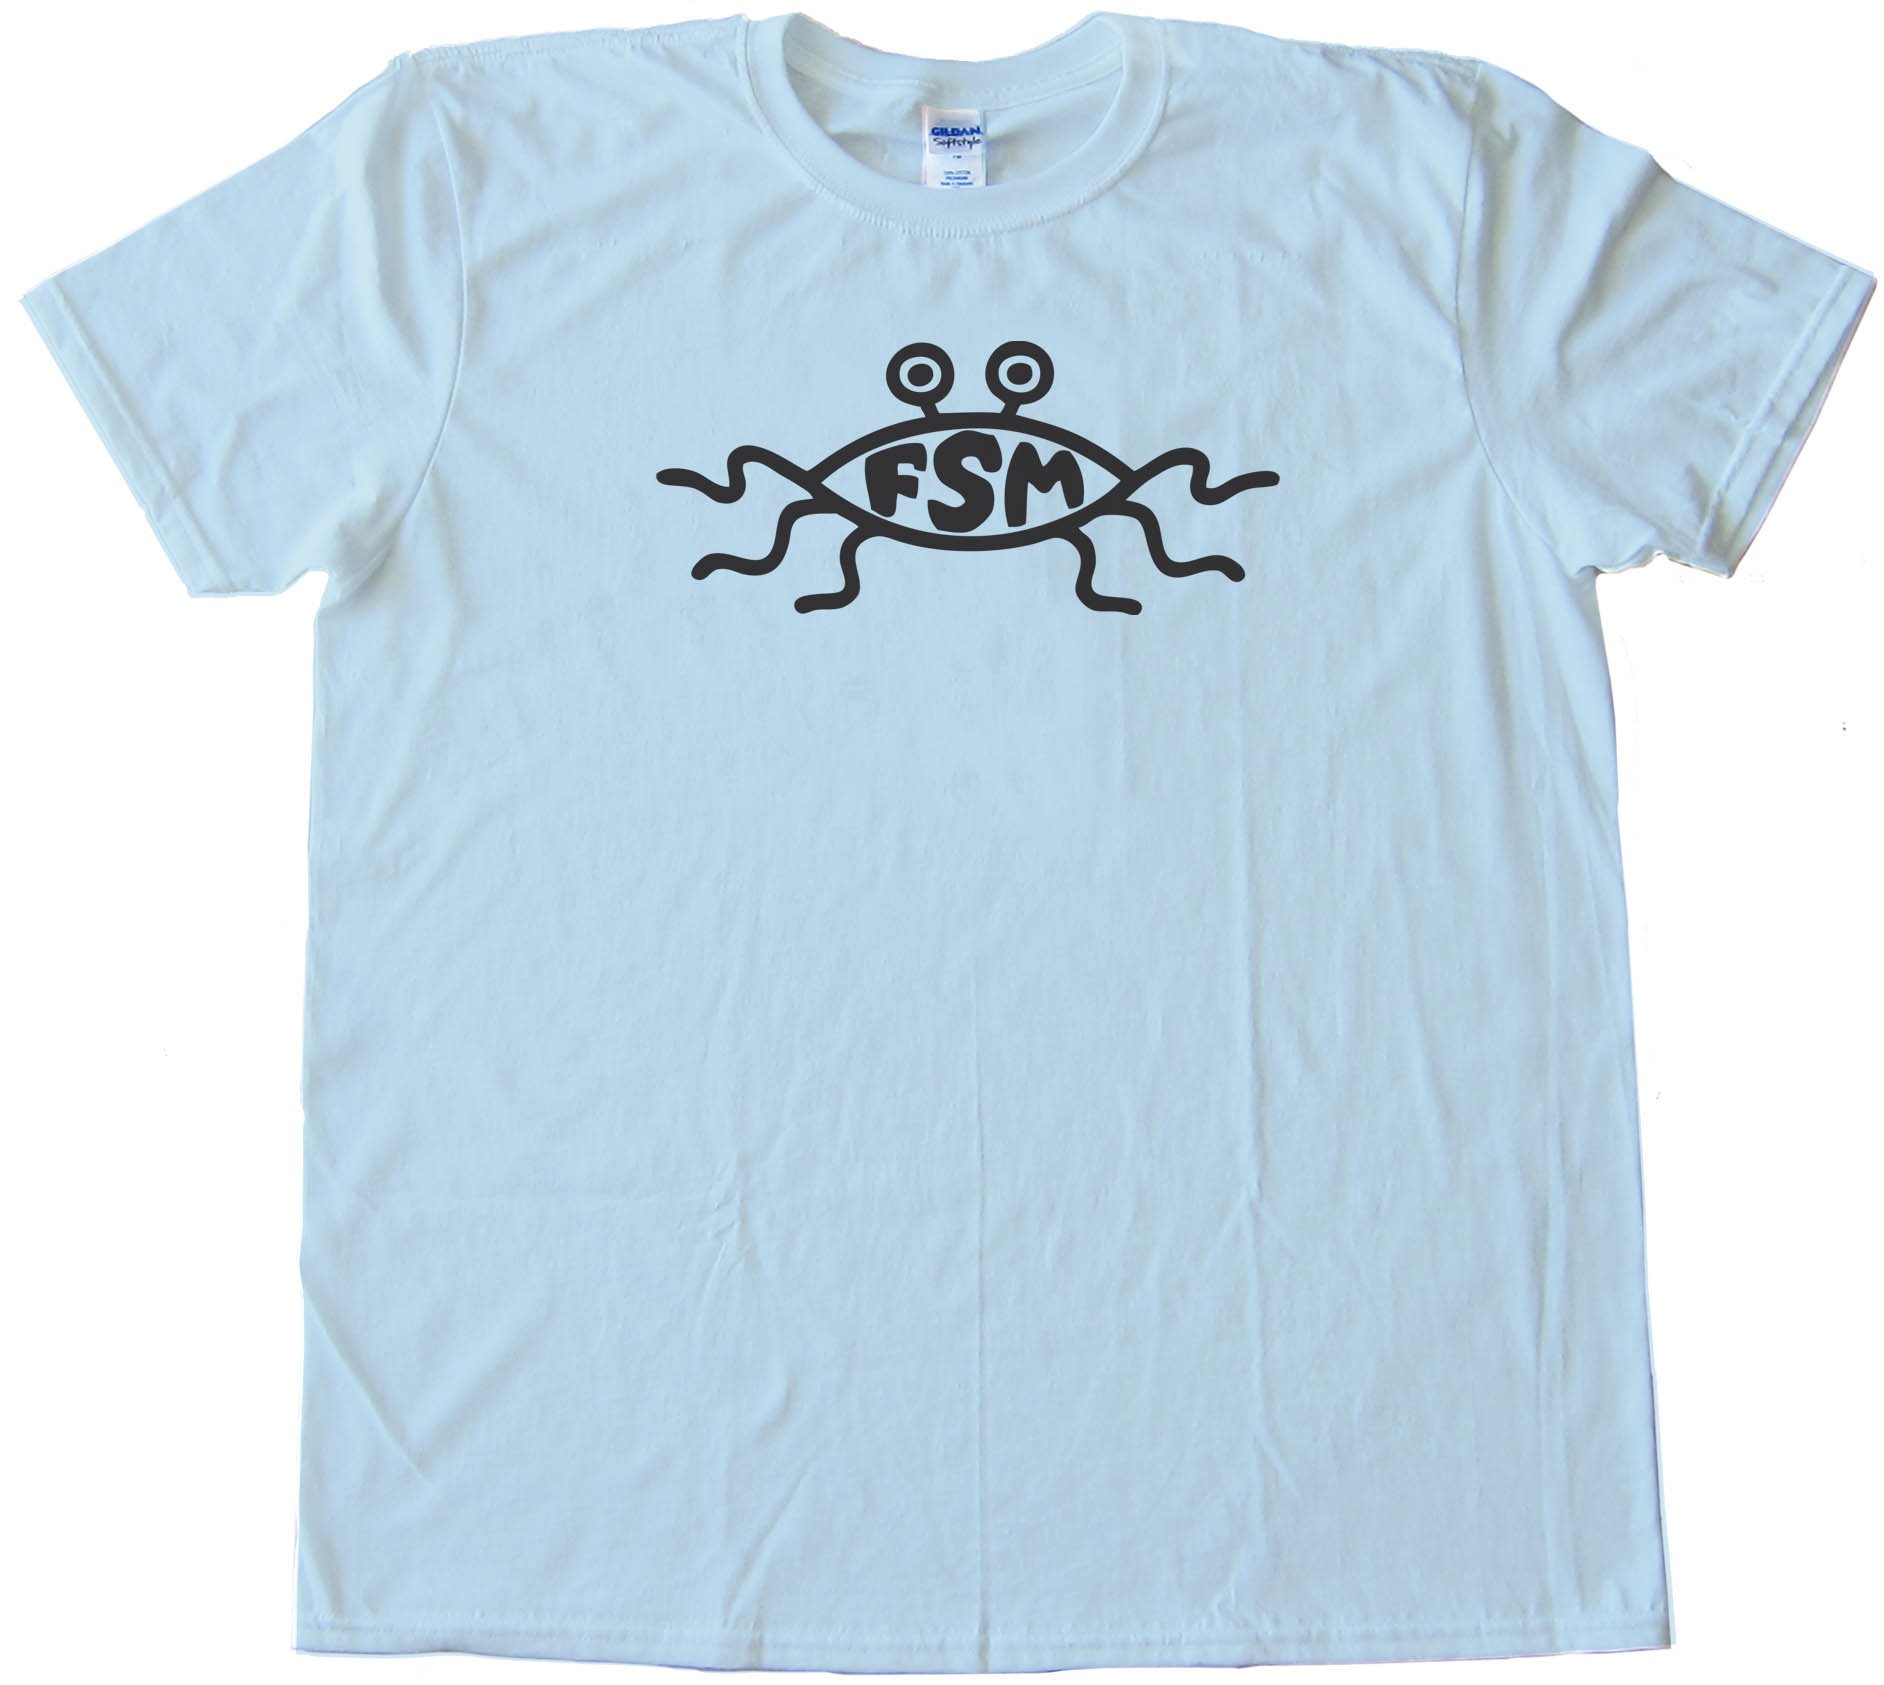 Fsm Symbol - The Flying Spaghetti Monster - Tee Shirt